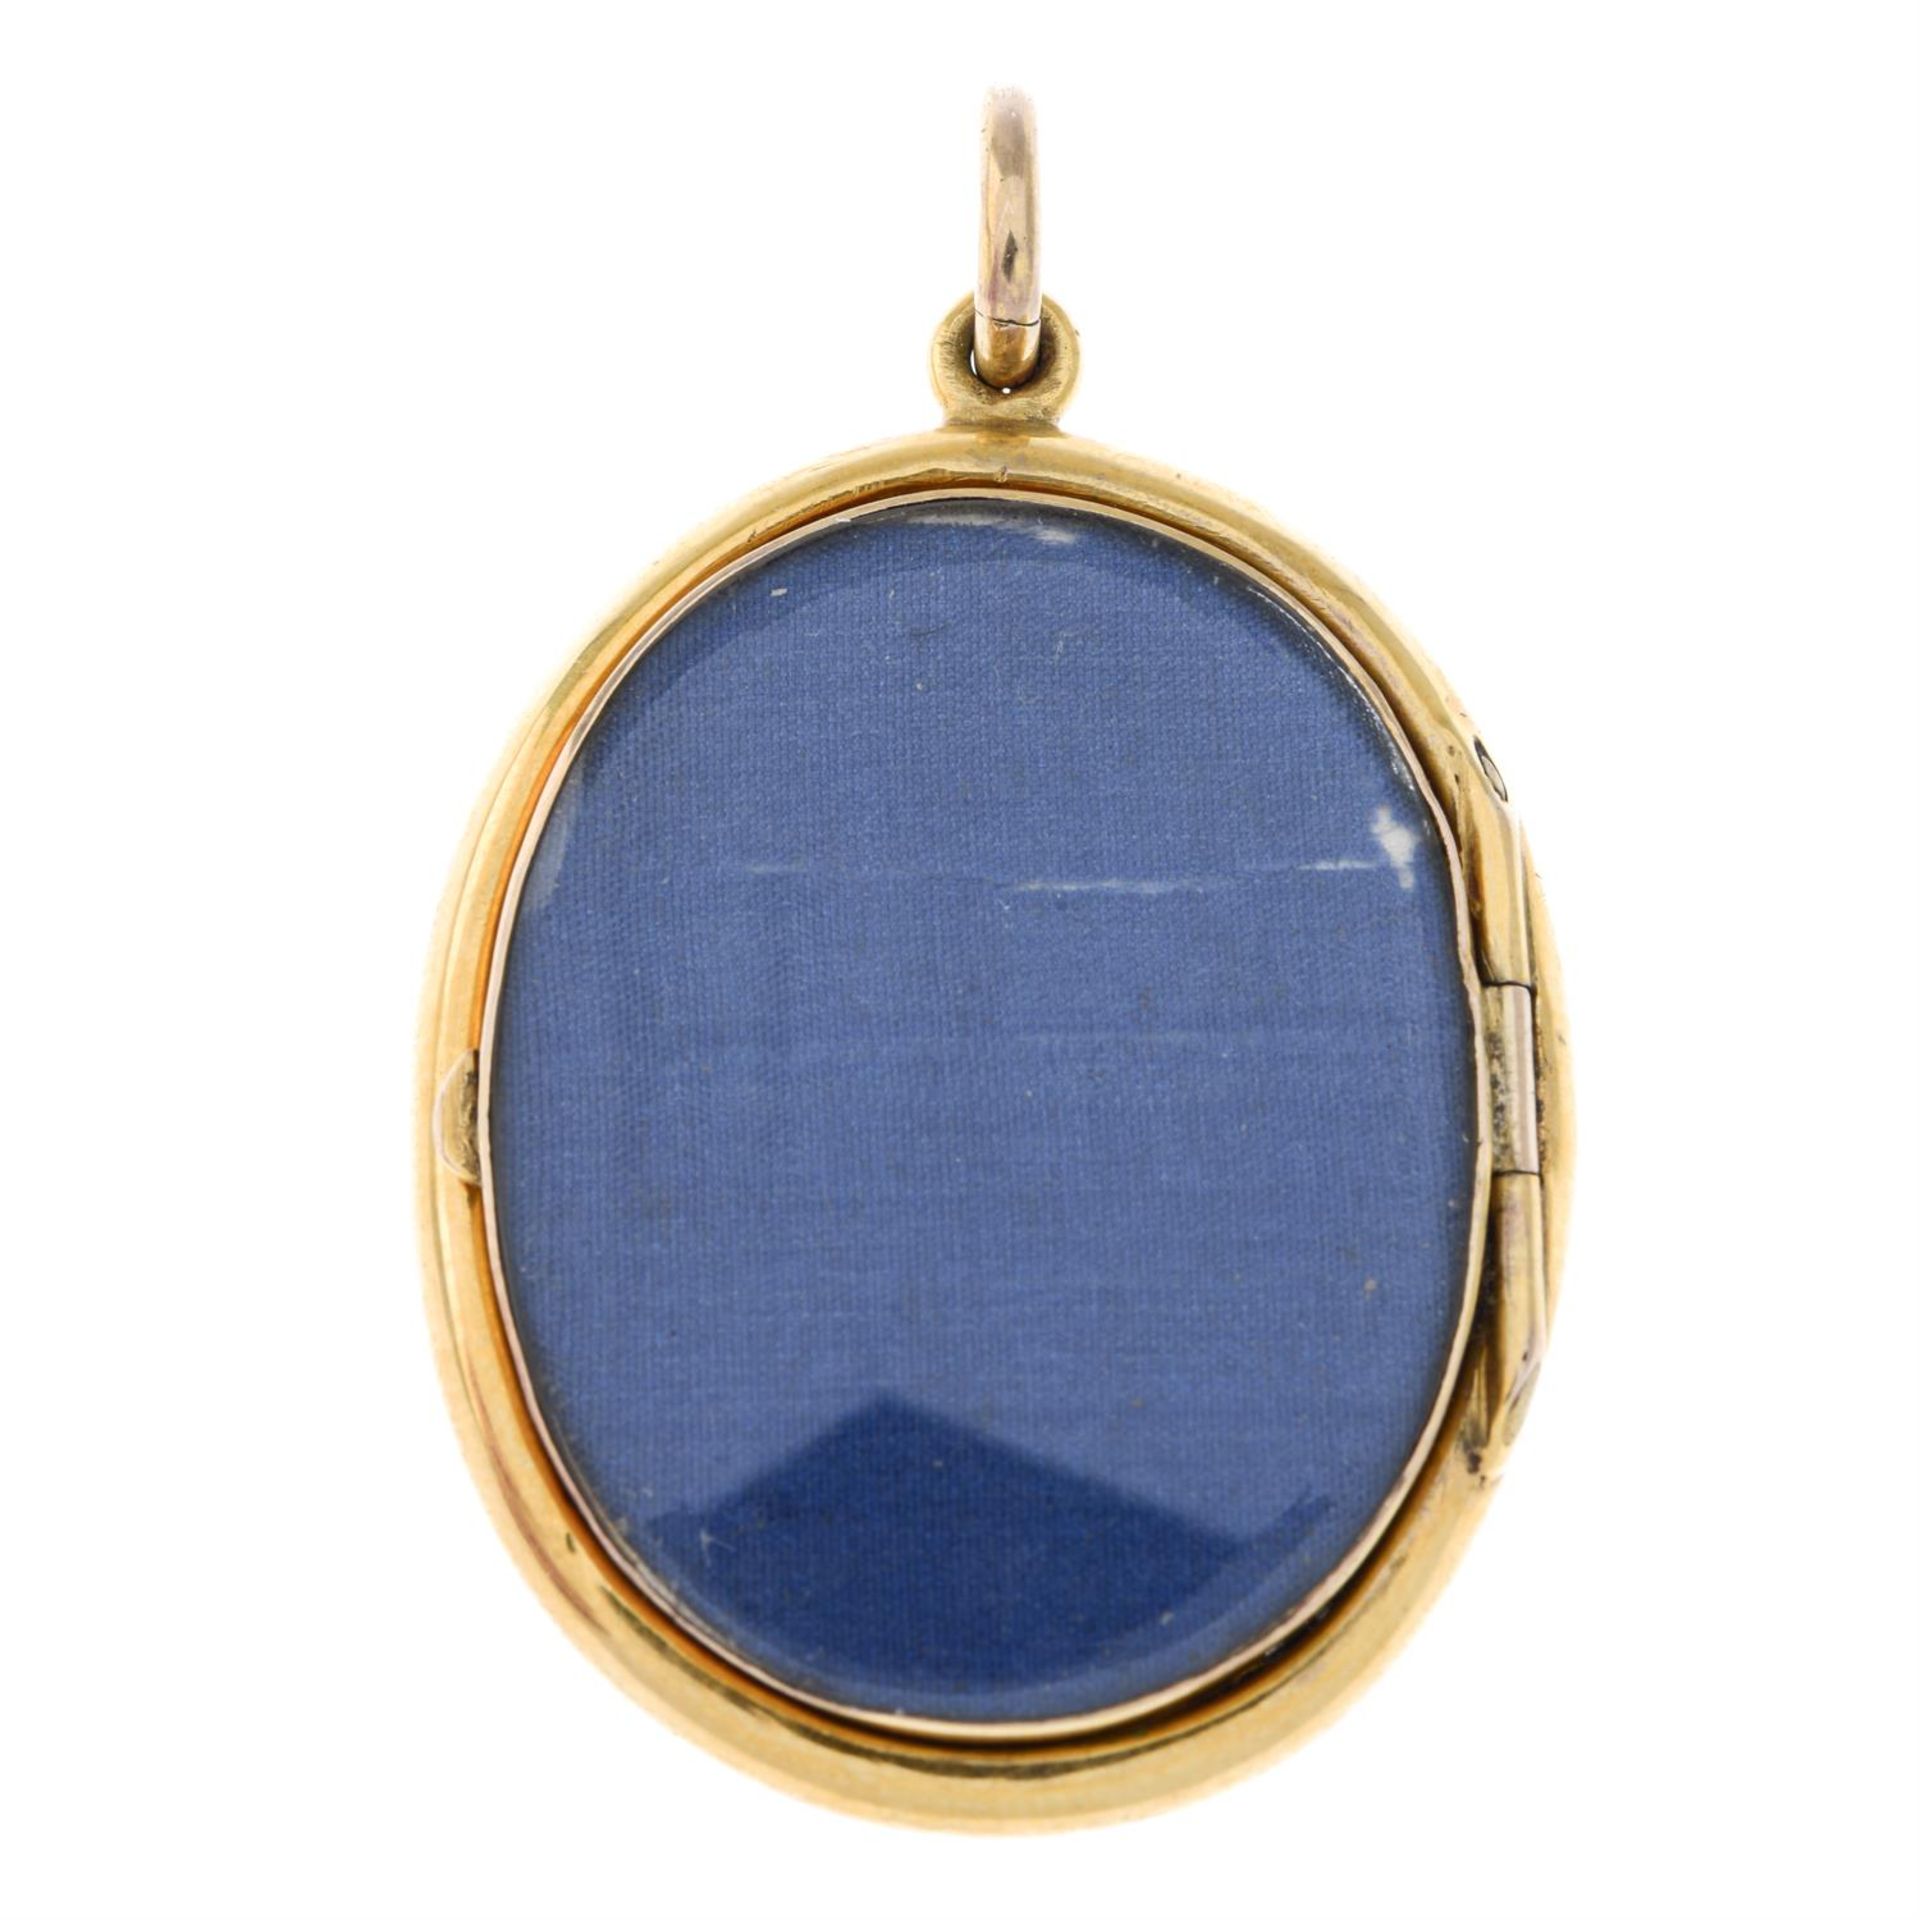 Victorian locket pendant - Image 2 of 2